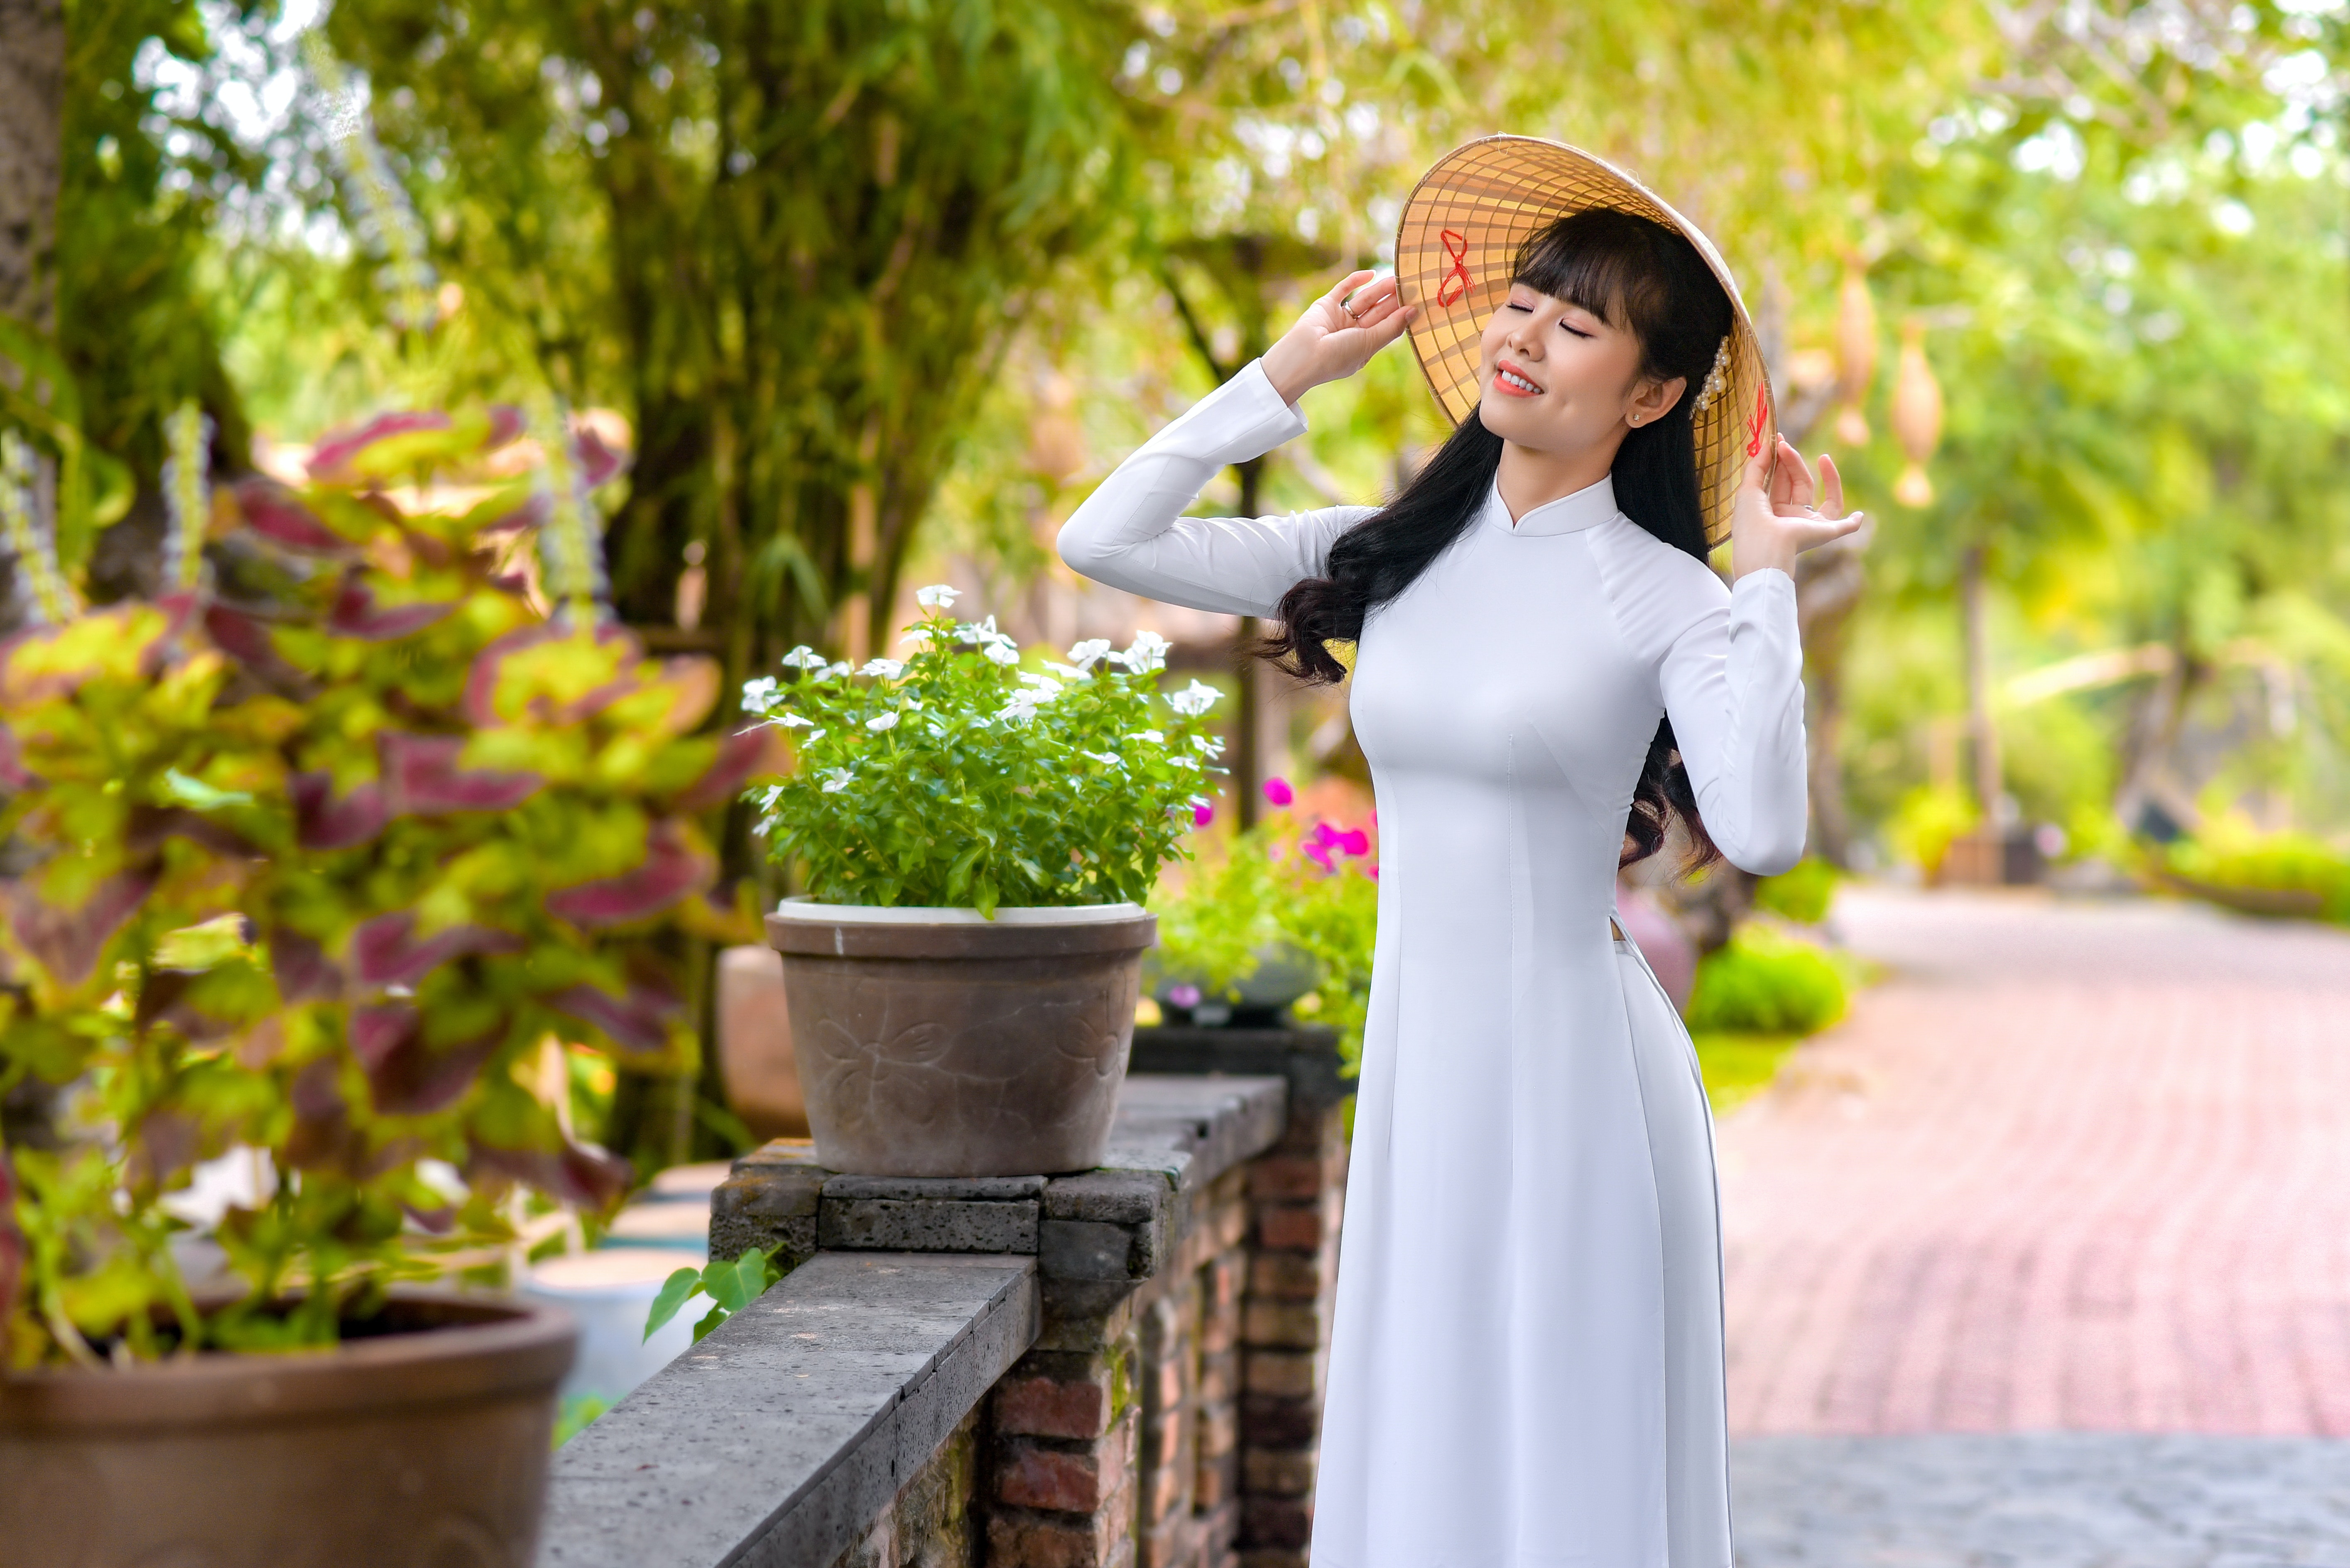 Traditional dress of Vietnam